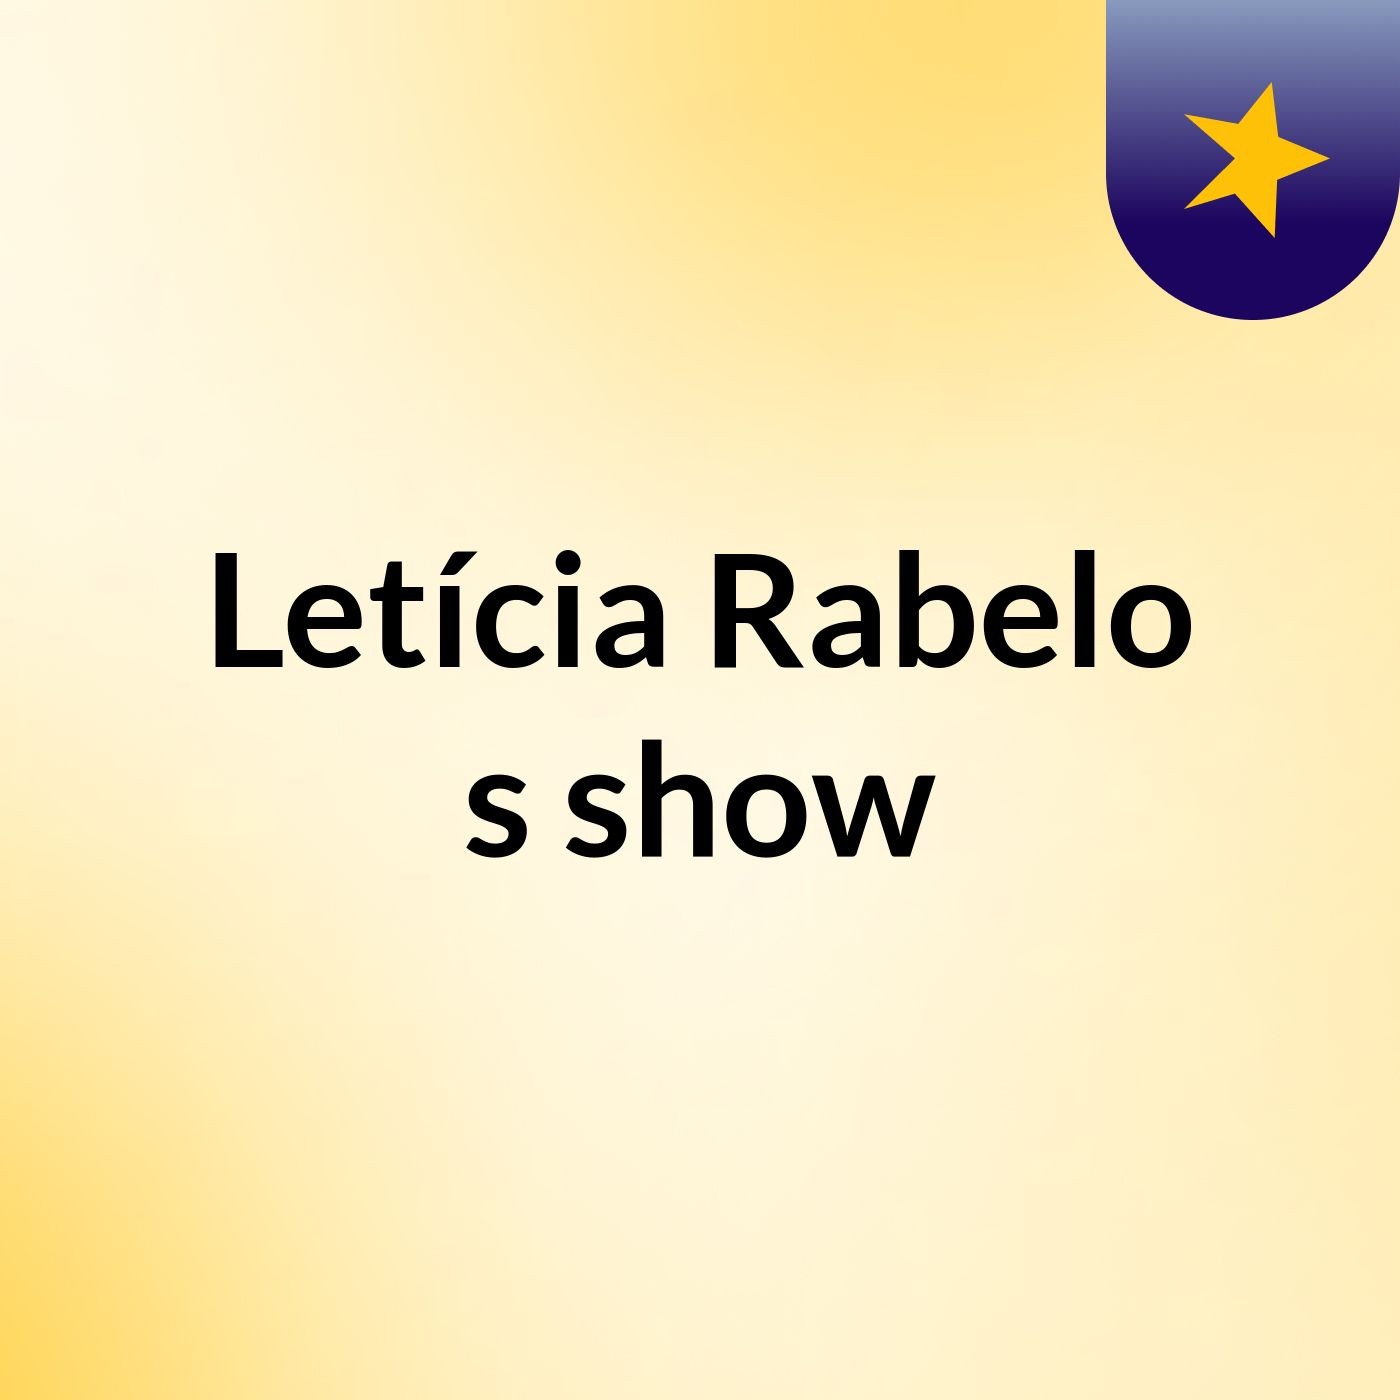 Letícia Rabelo's show